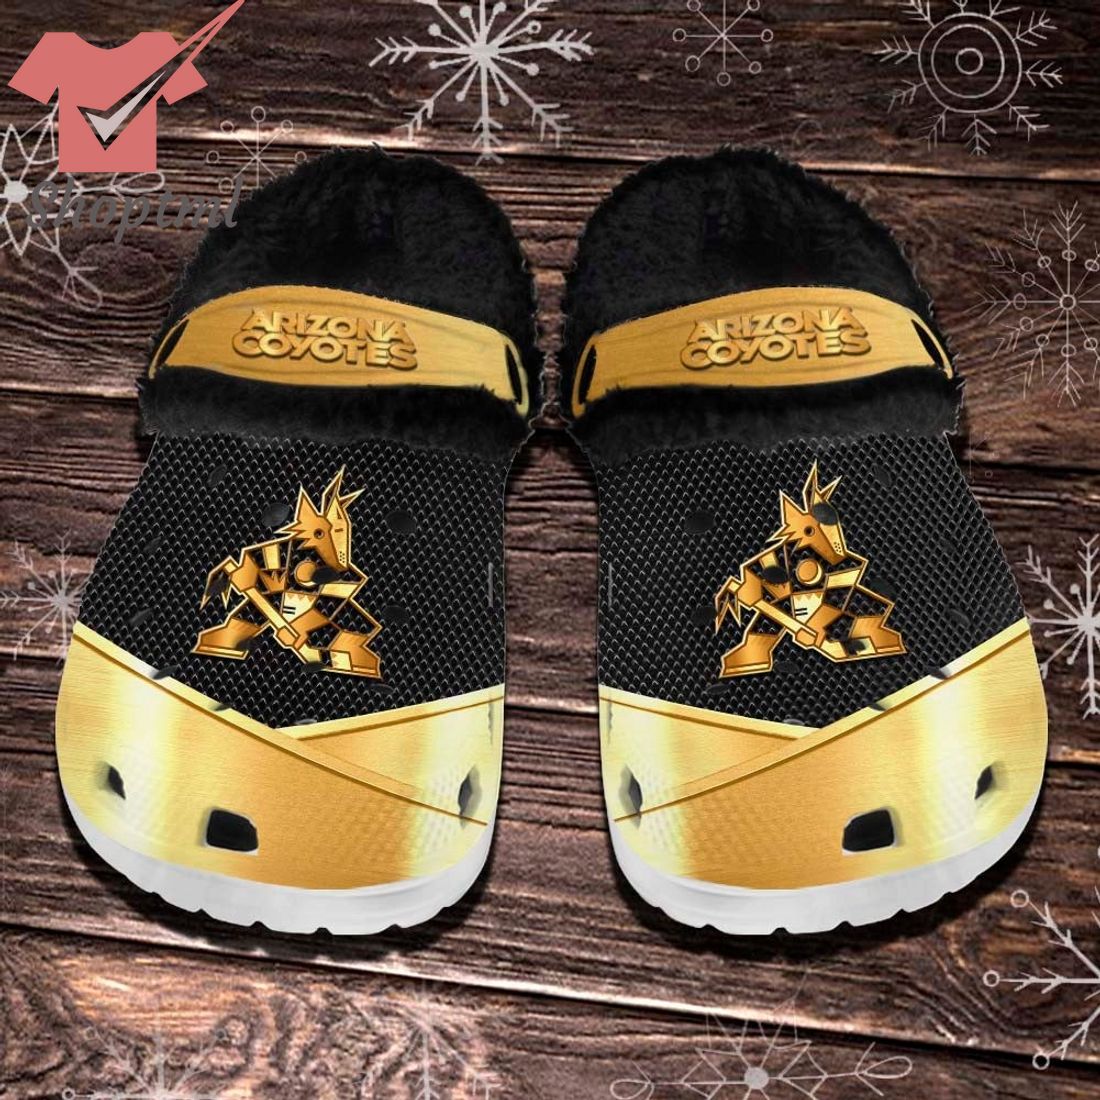 Arizona Coyotes NHL Fleece Crocs Clogs Shoes